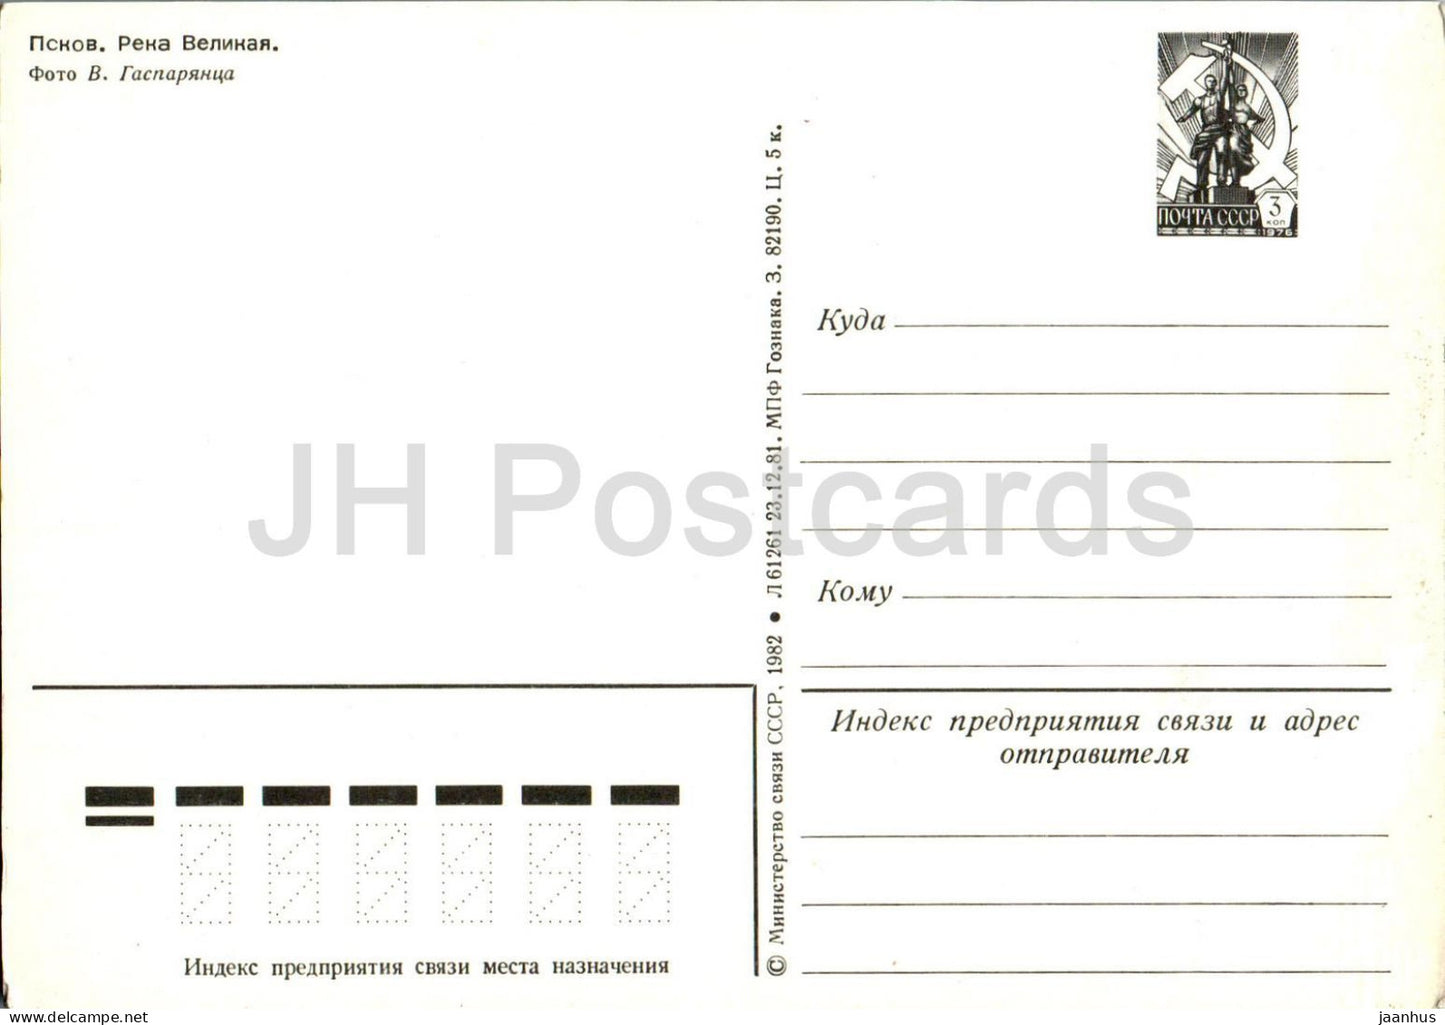 Pskov - Rivière Velikaya - entier postal - 1982 - Russie URSS - inutilisé 